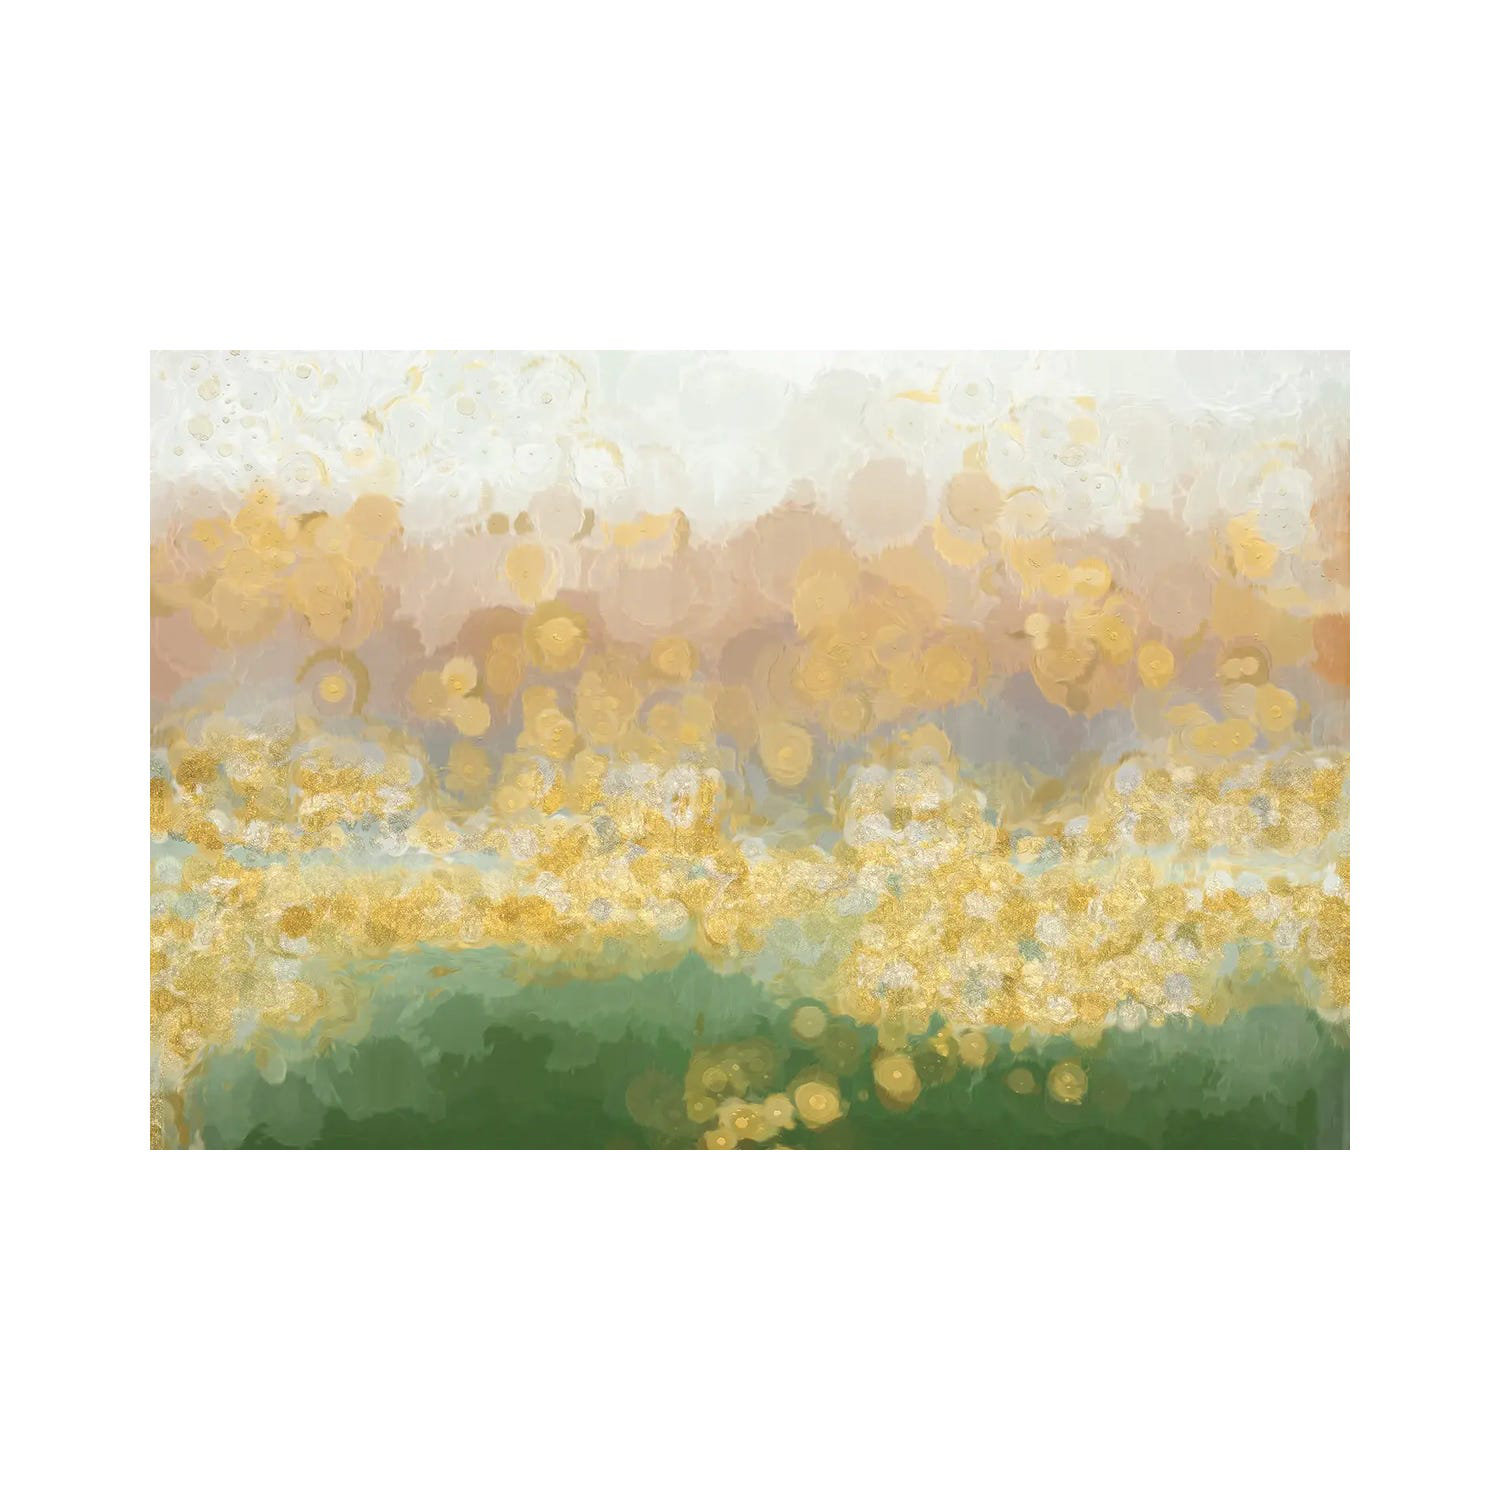 Global GalleryAlbena Hristova Desert Sunset Vessel II Giclee Stretched Canvas Artwork 30 x 30 